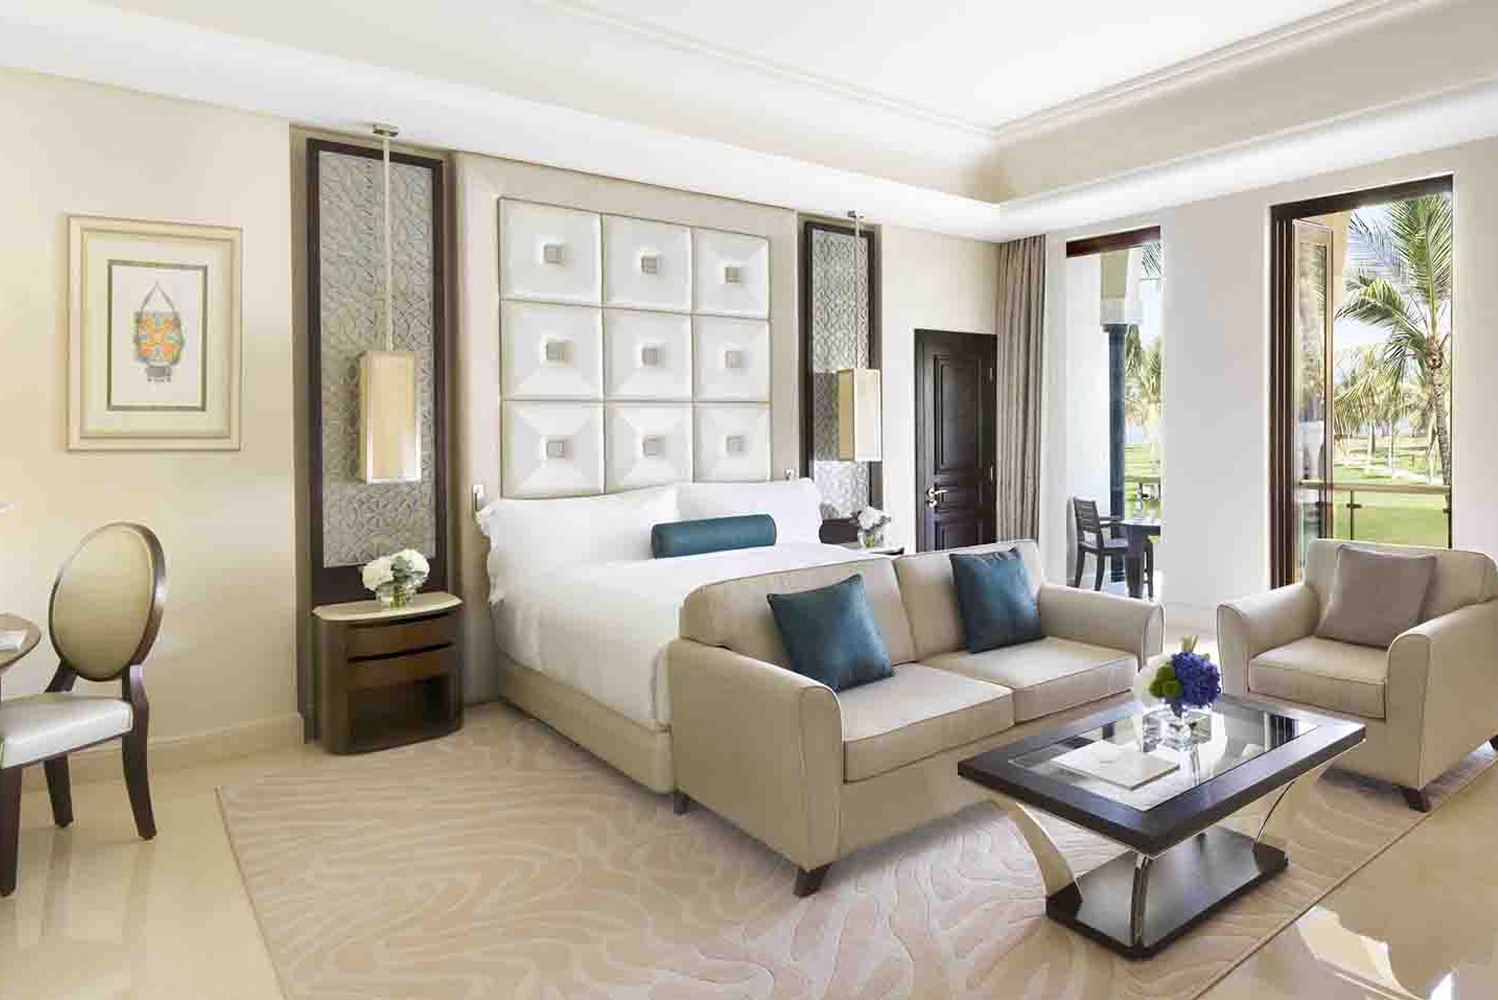 Al Bustan Palace a Ritz-Carlton Hotel reopened following enhancements